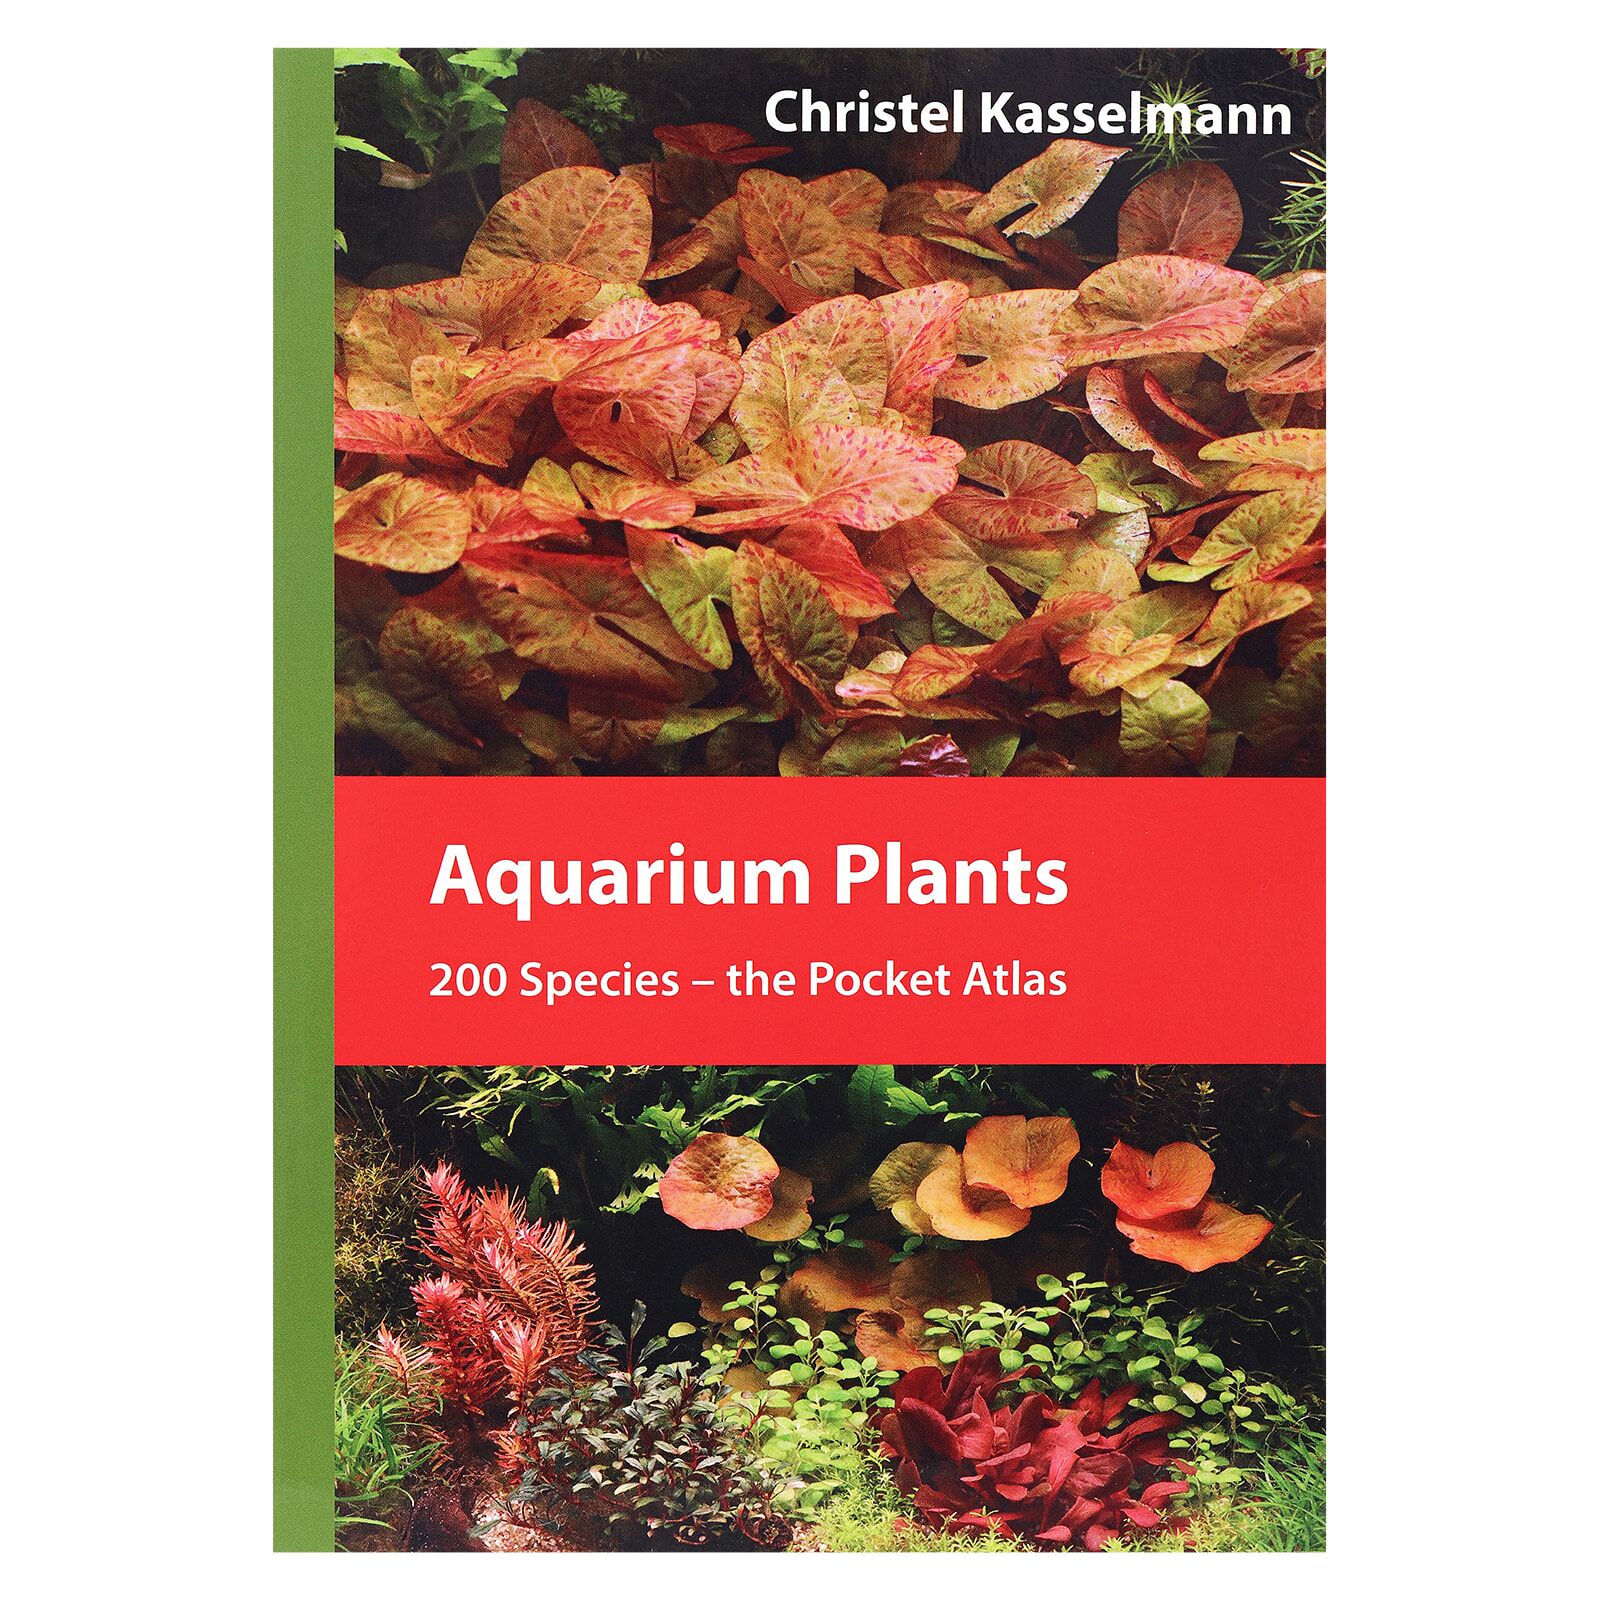 Aquarium Plants - 200 Species - the Pocket Atlas